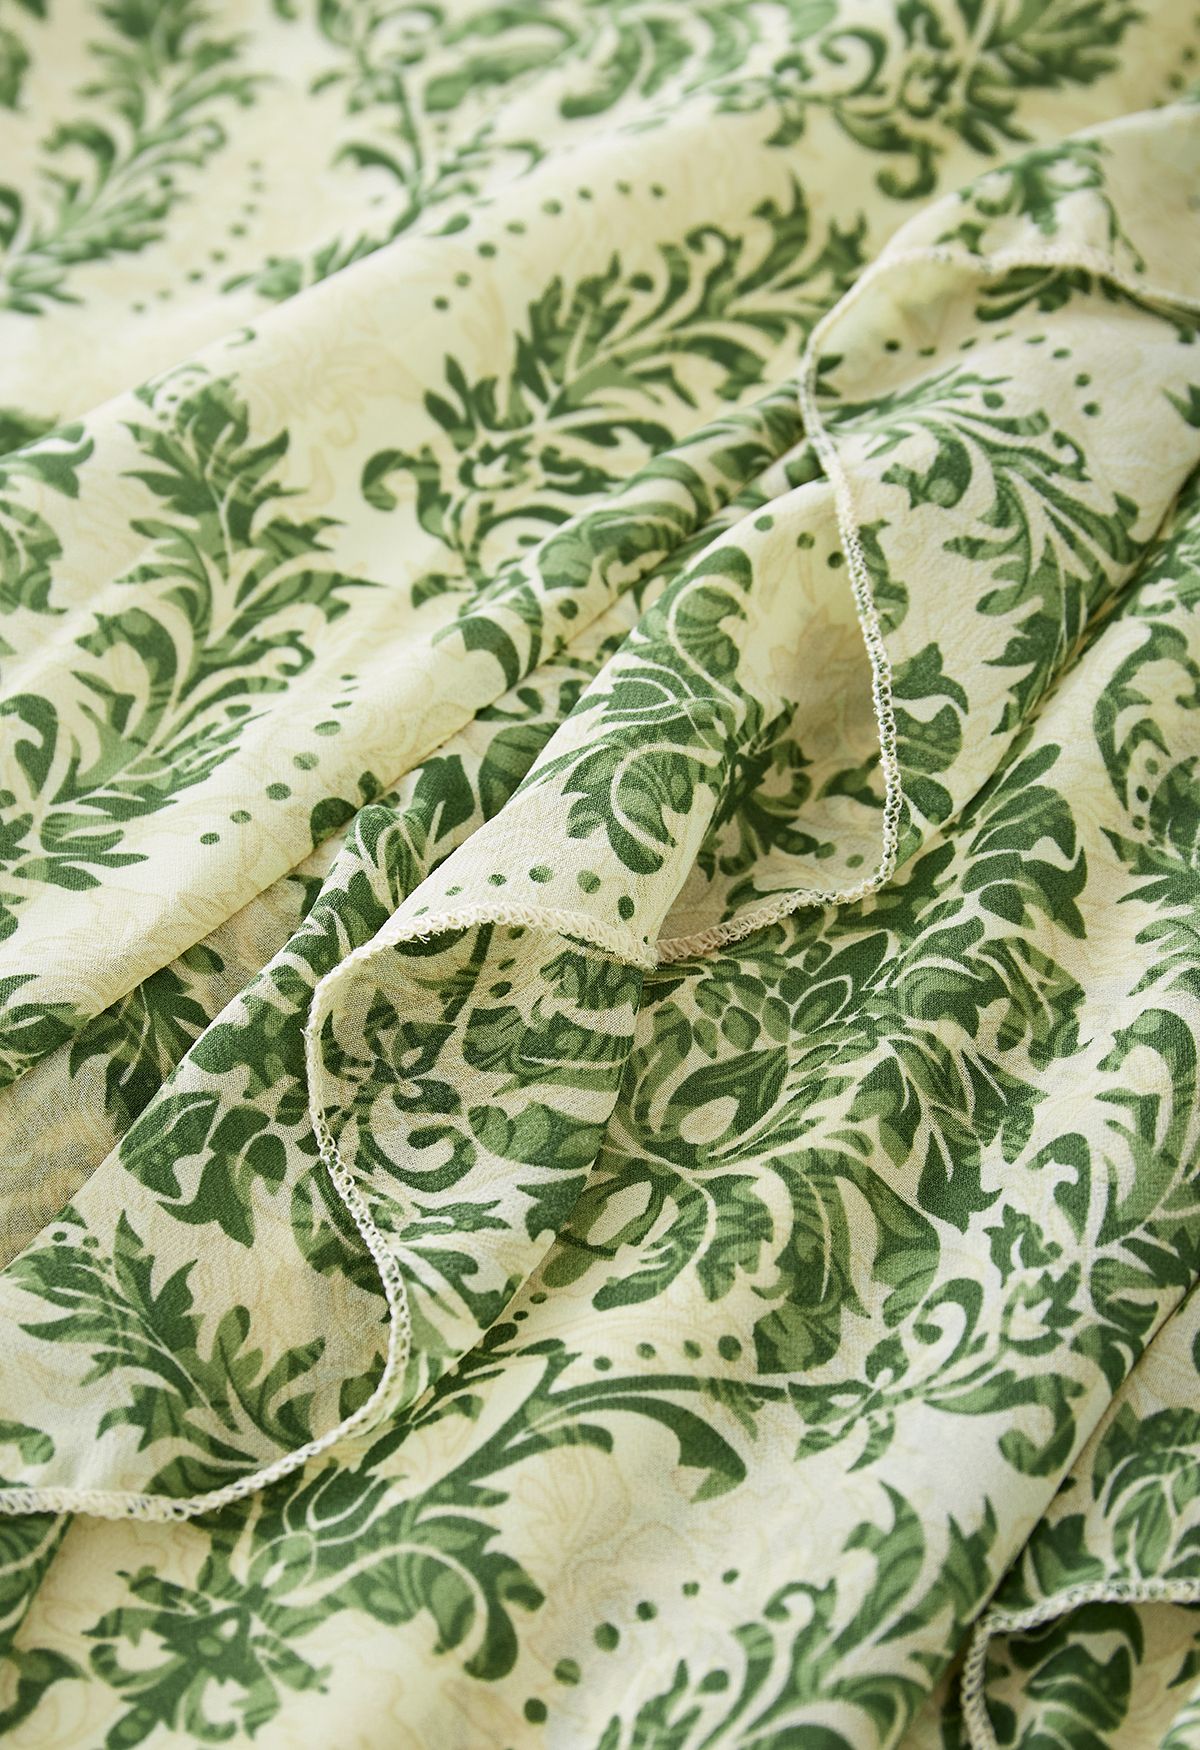 Elegant Floral Ruffle Trim Tie Waist Chiffon Dress in Green